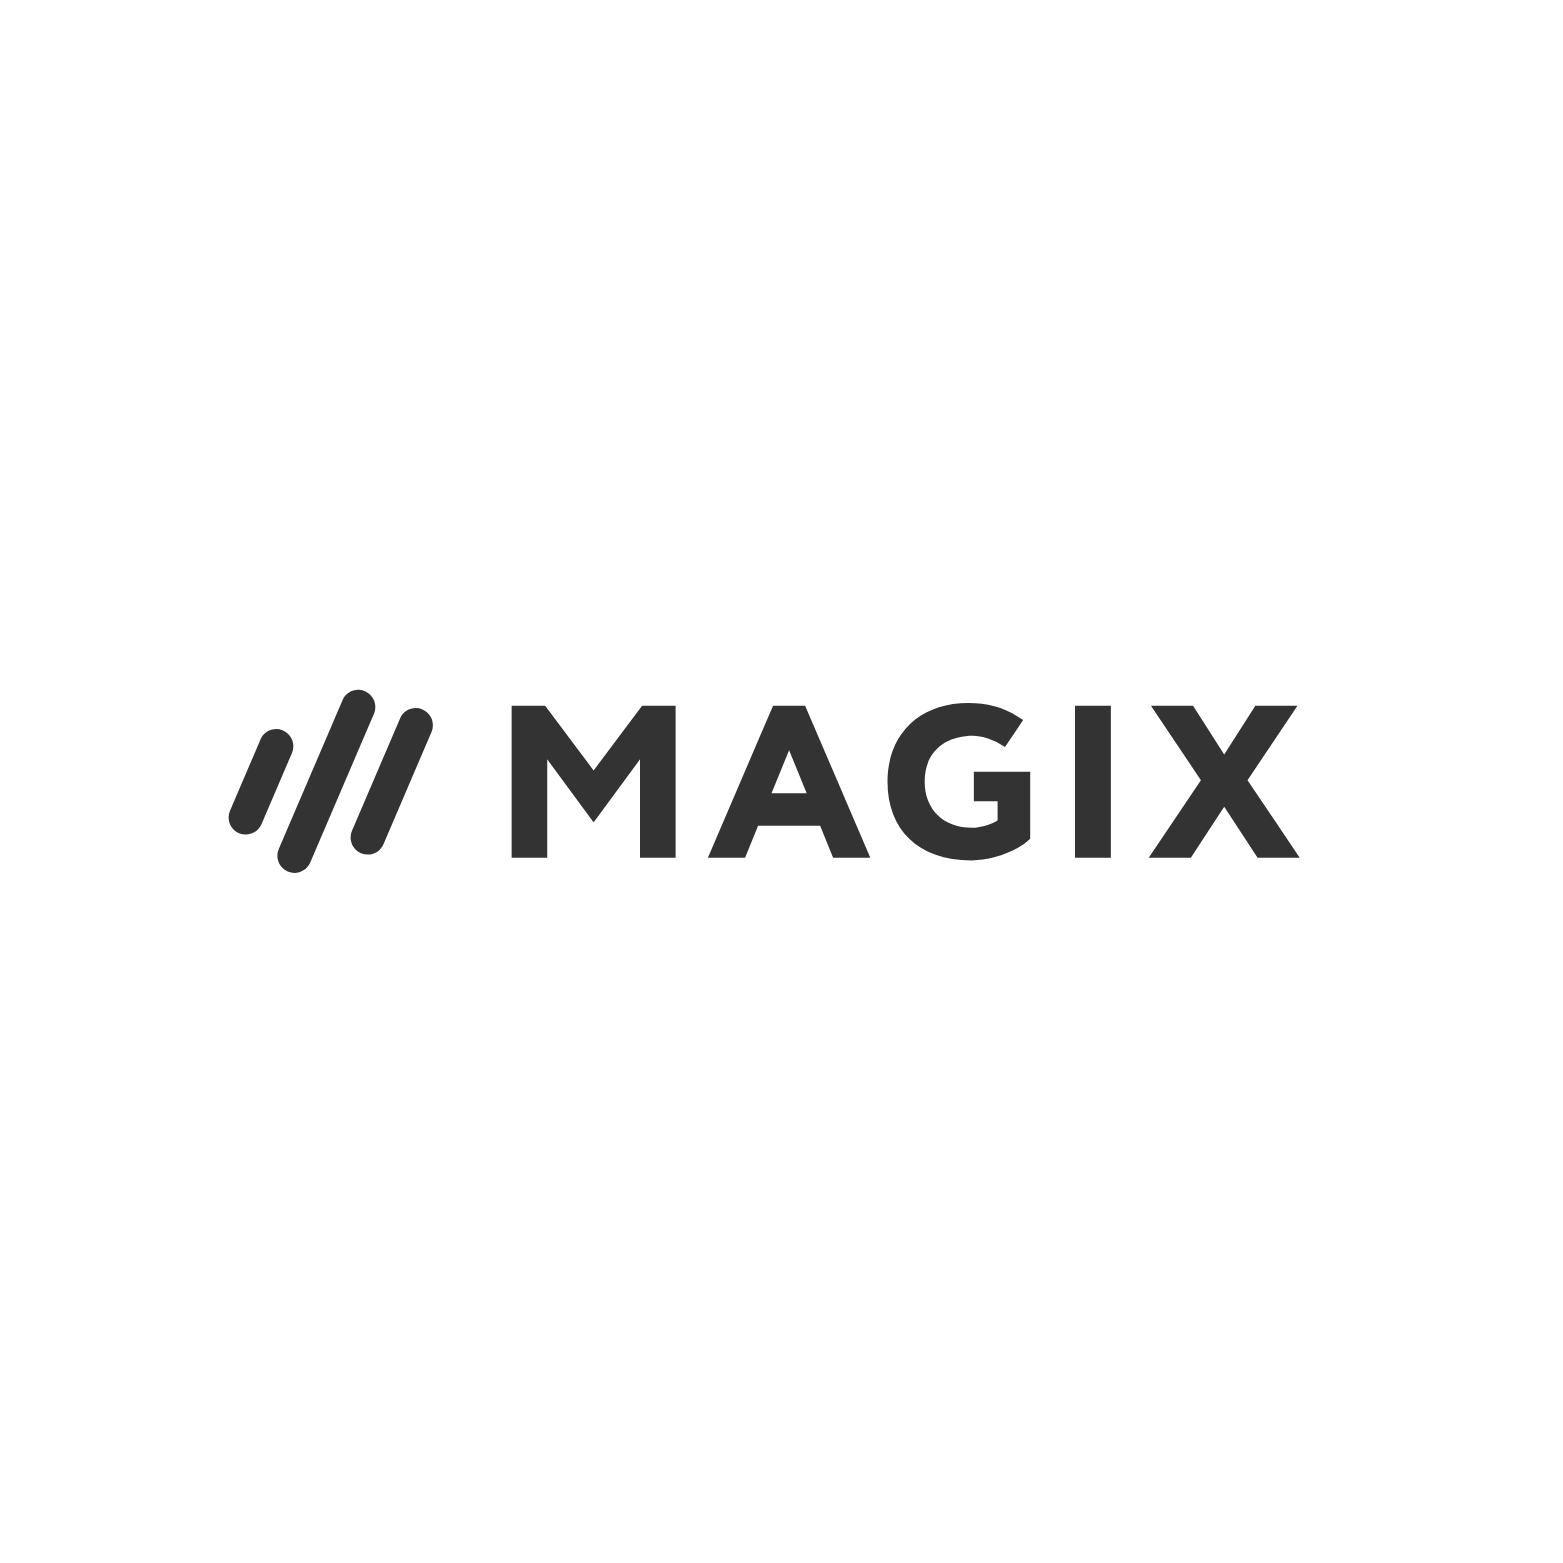 Magix & Vegas Creative Software